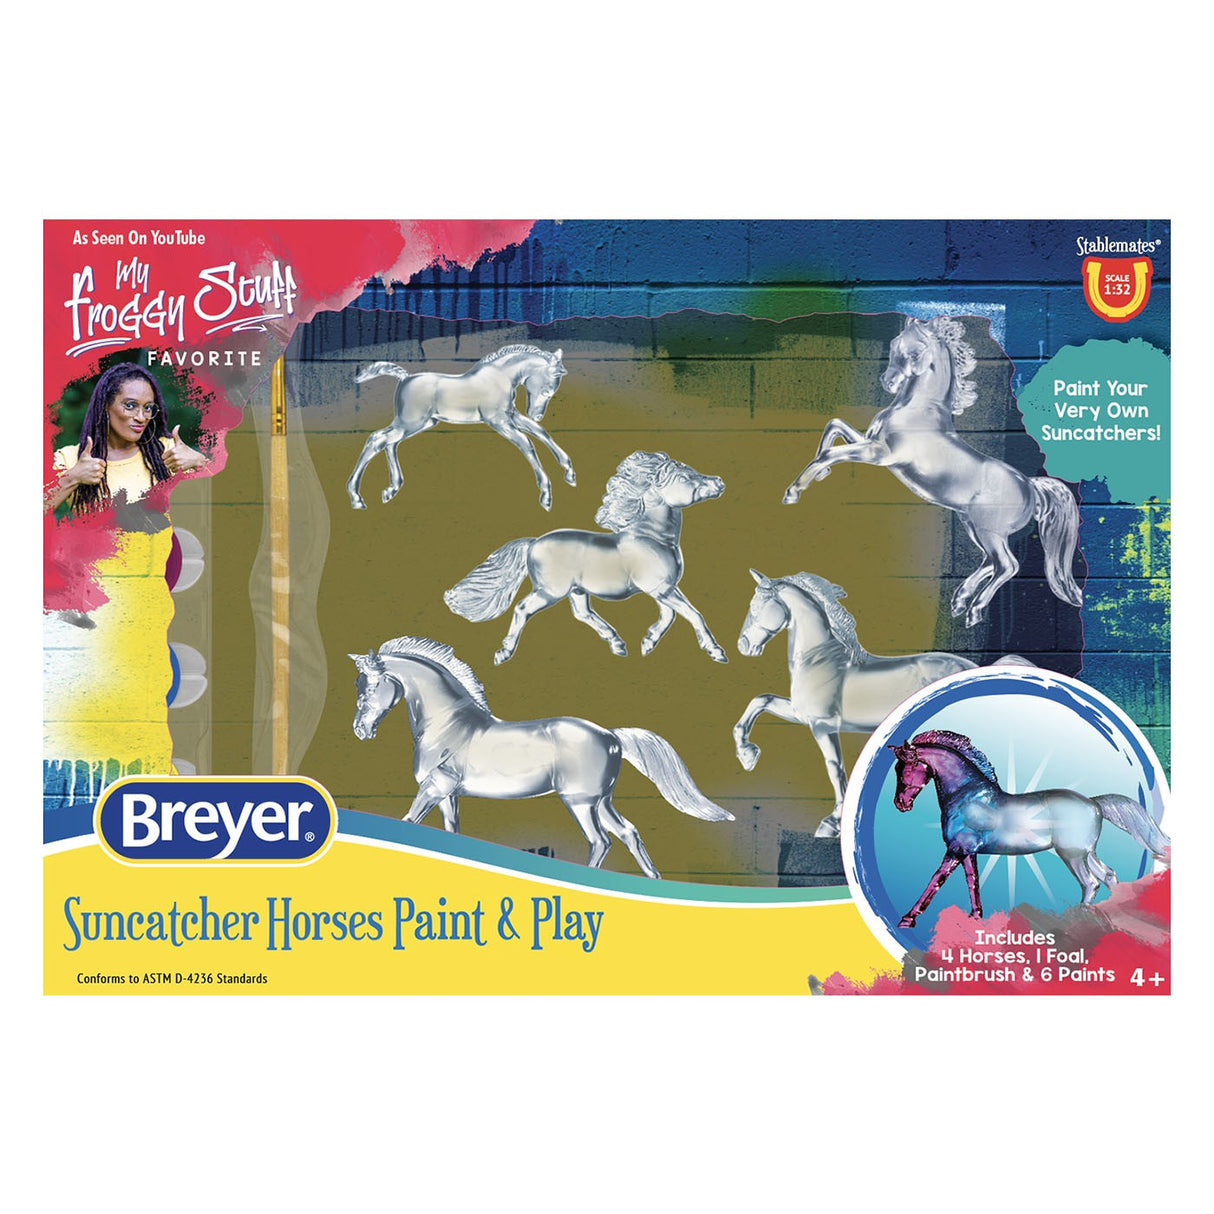 Breyer Suncatchers Horse Paint & Play